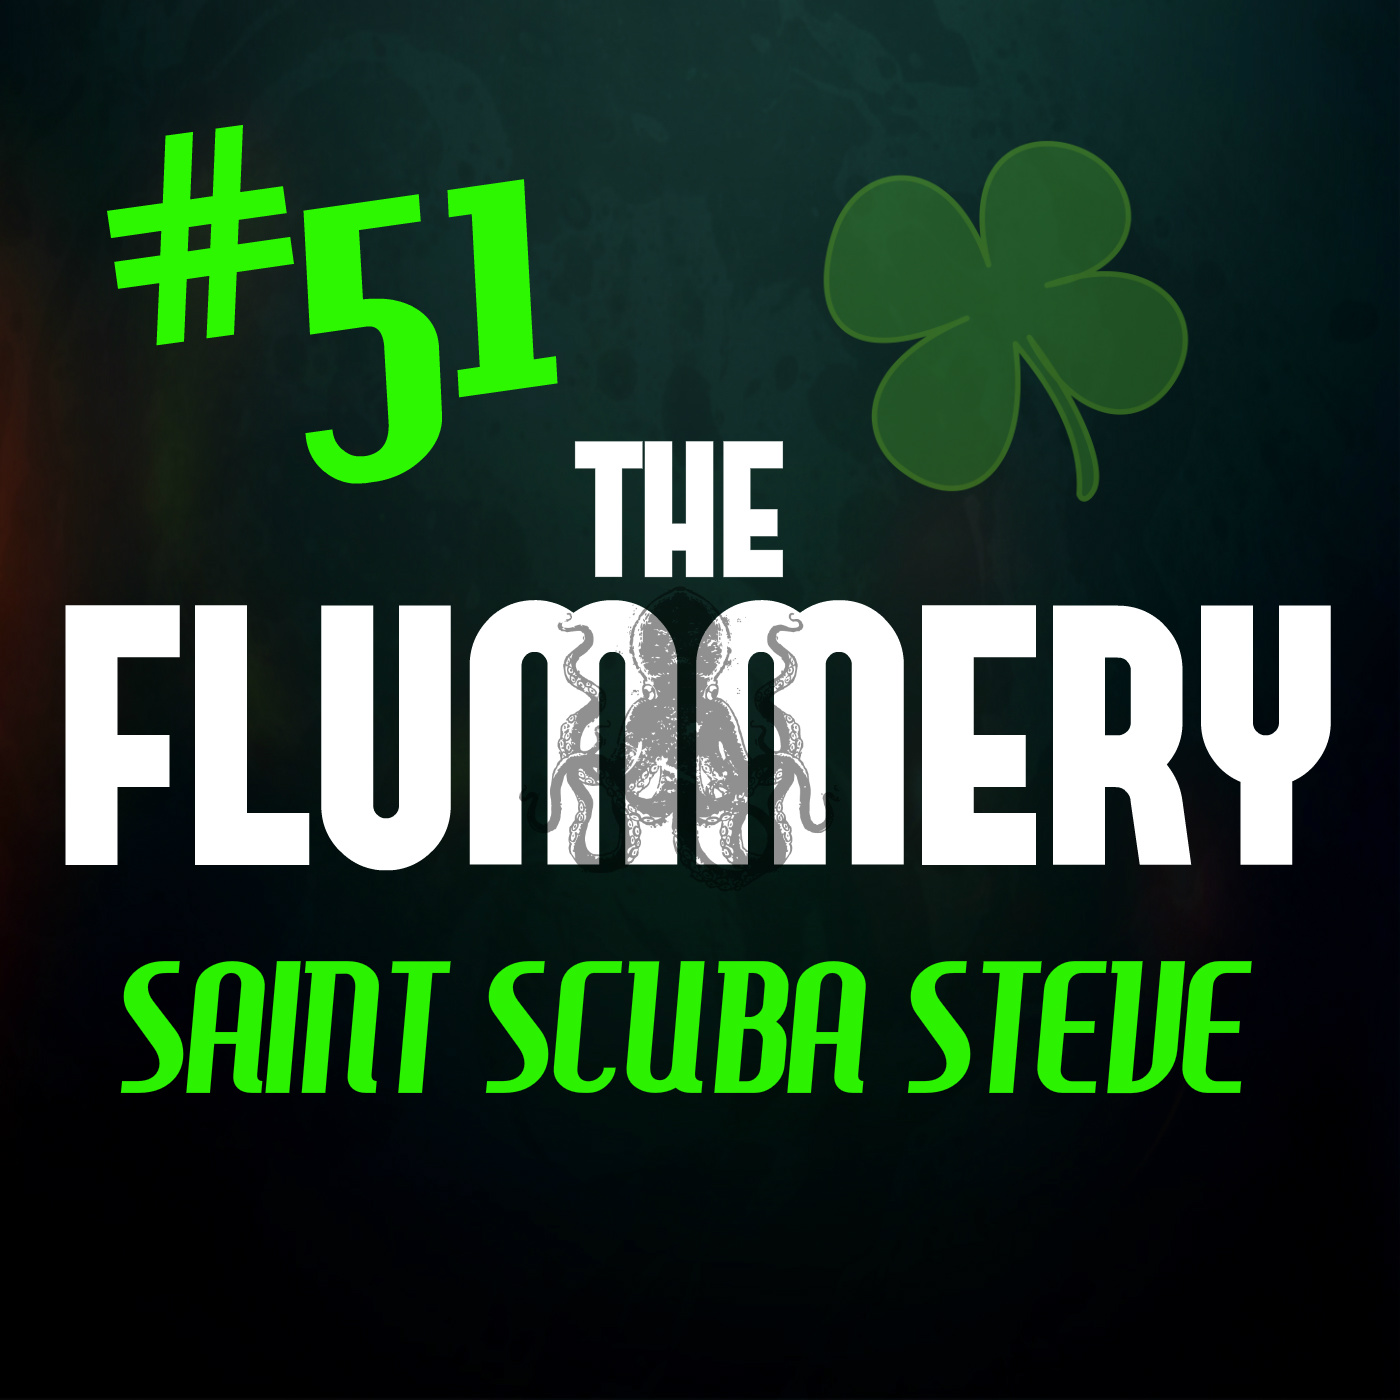 #51. Saint Scuba Steve